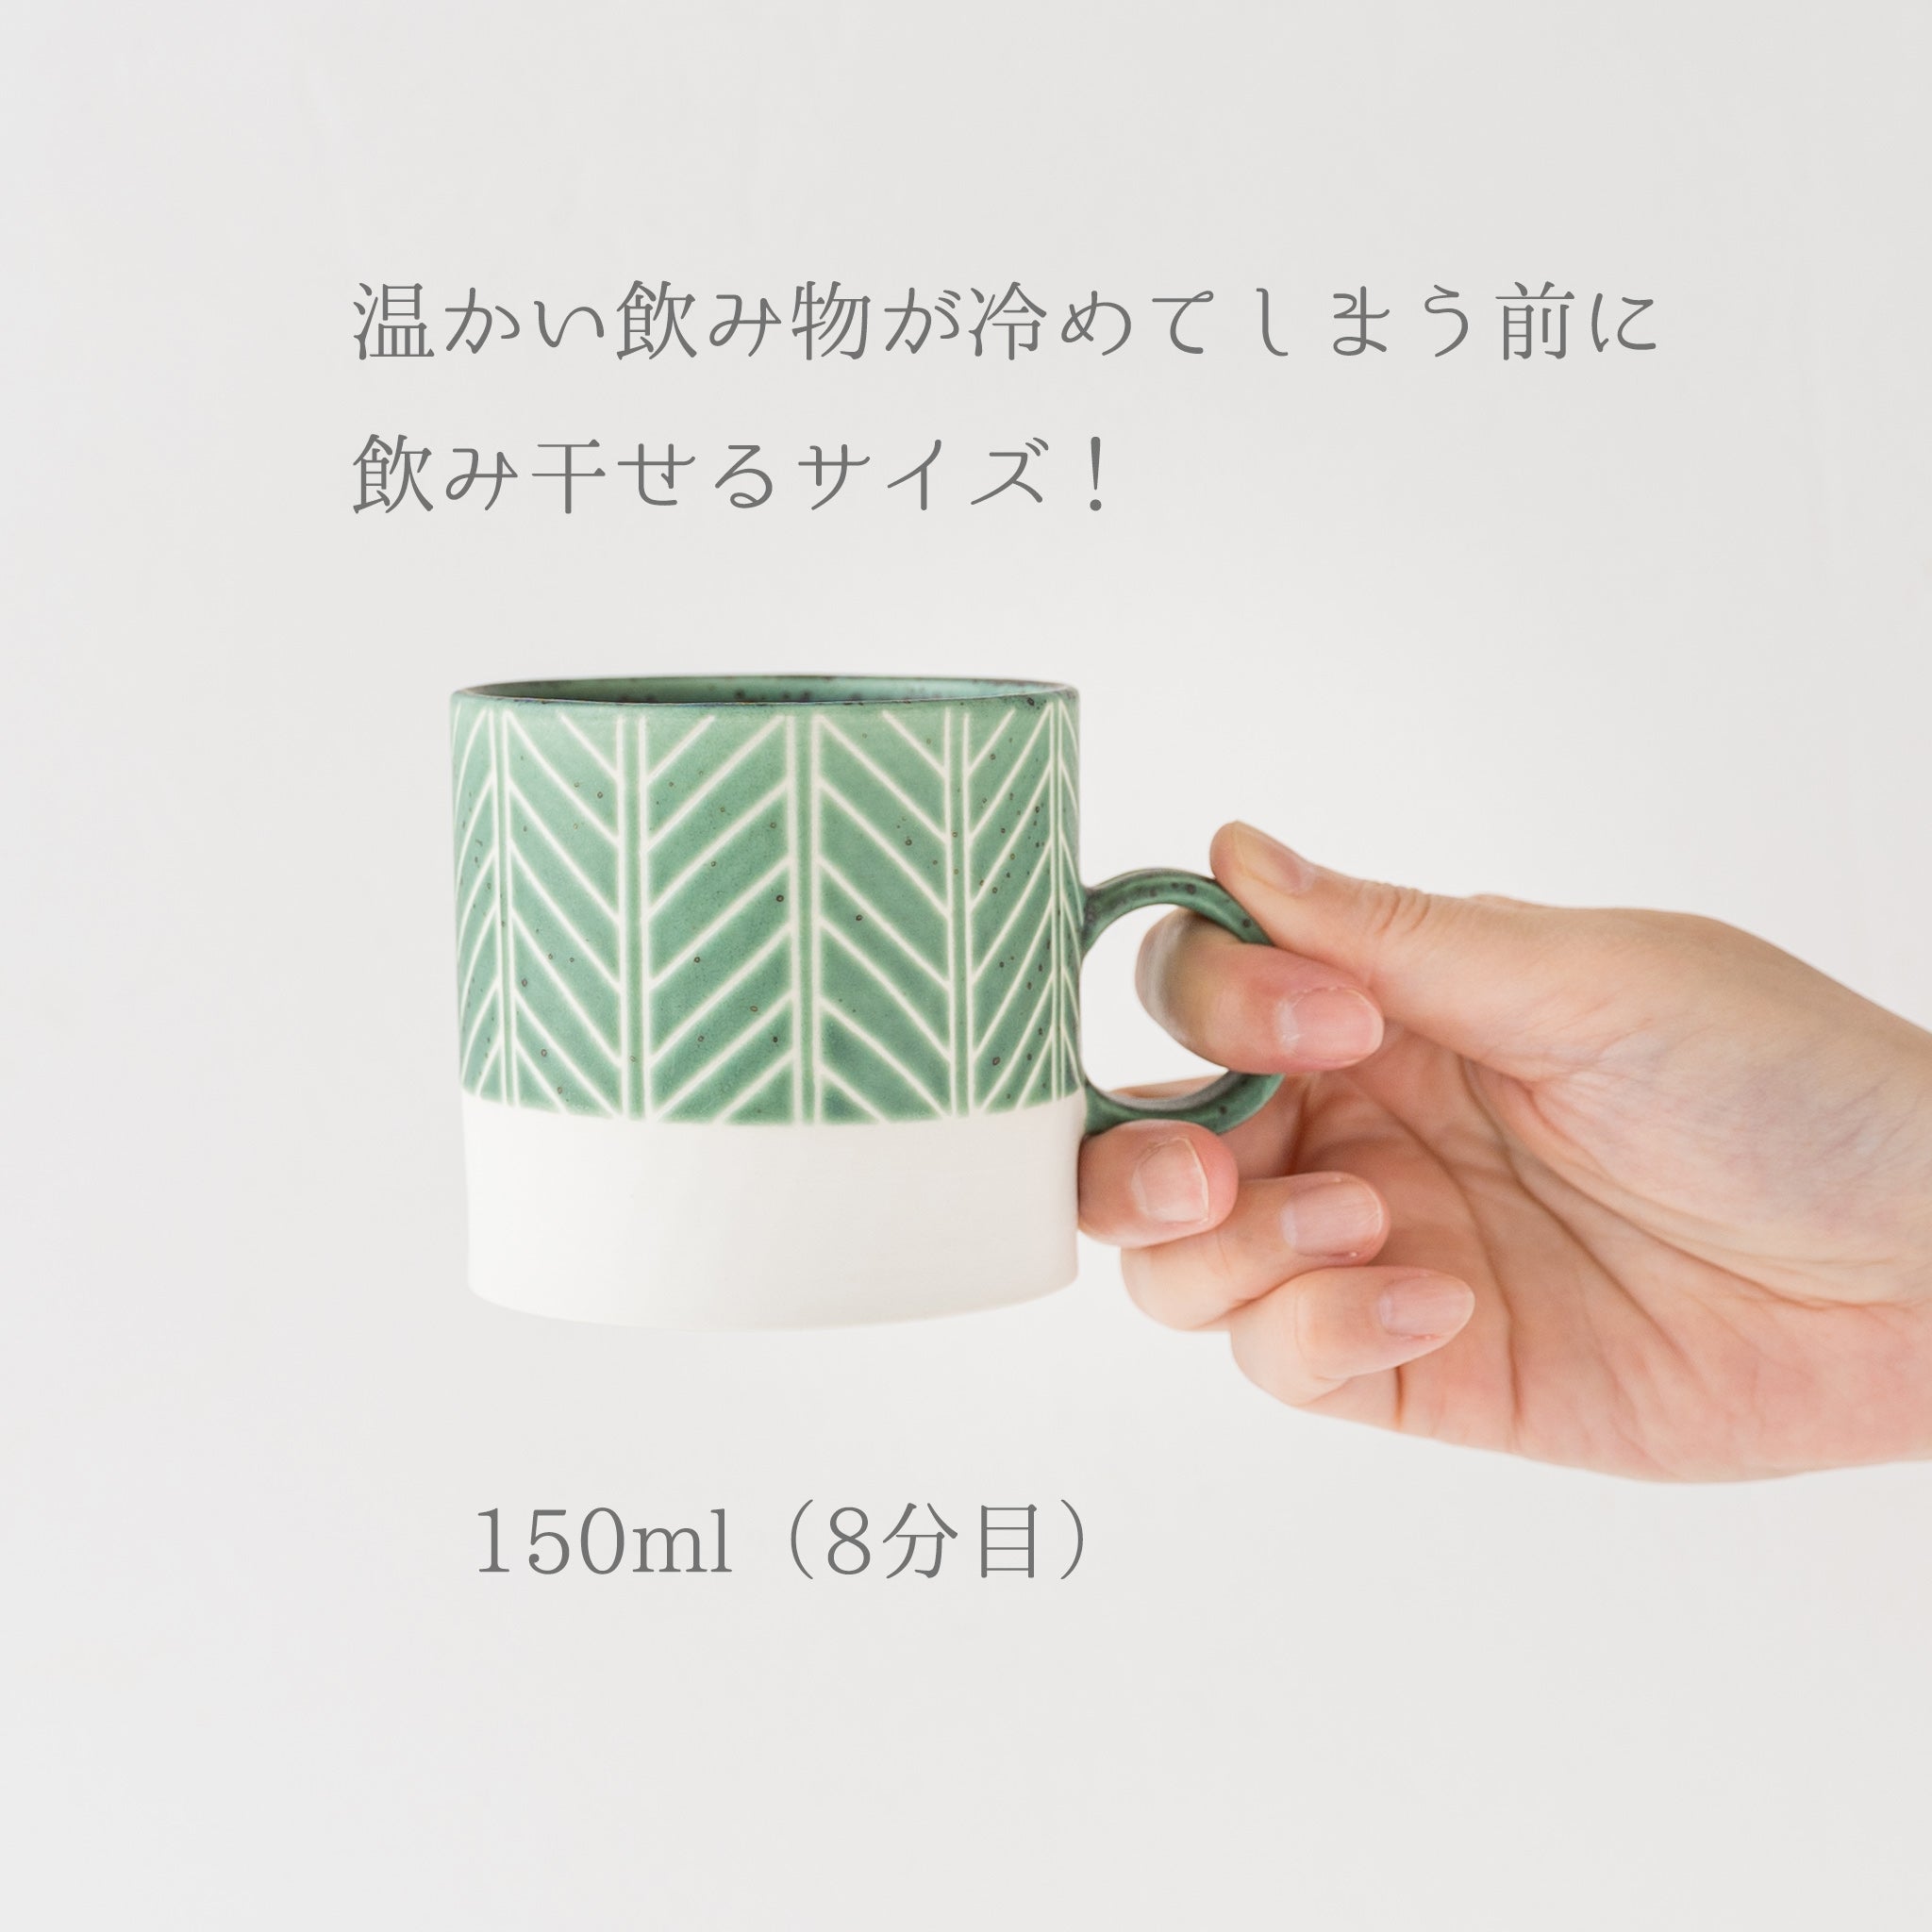 Fashionable and cute Yukari Nakagawa's mug